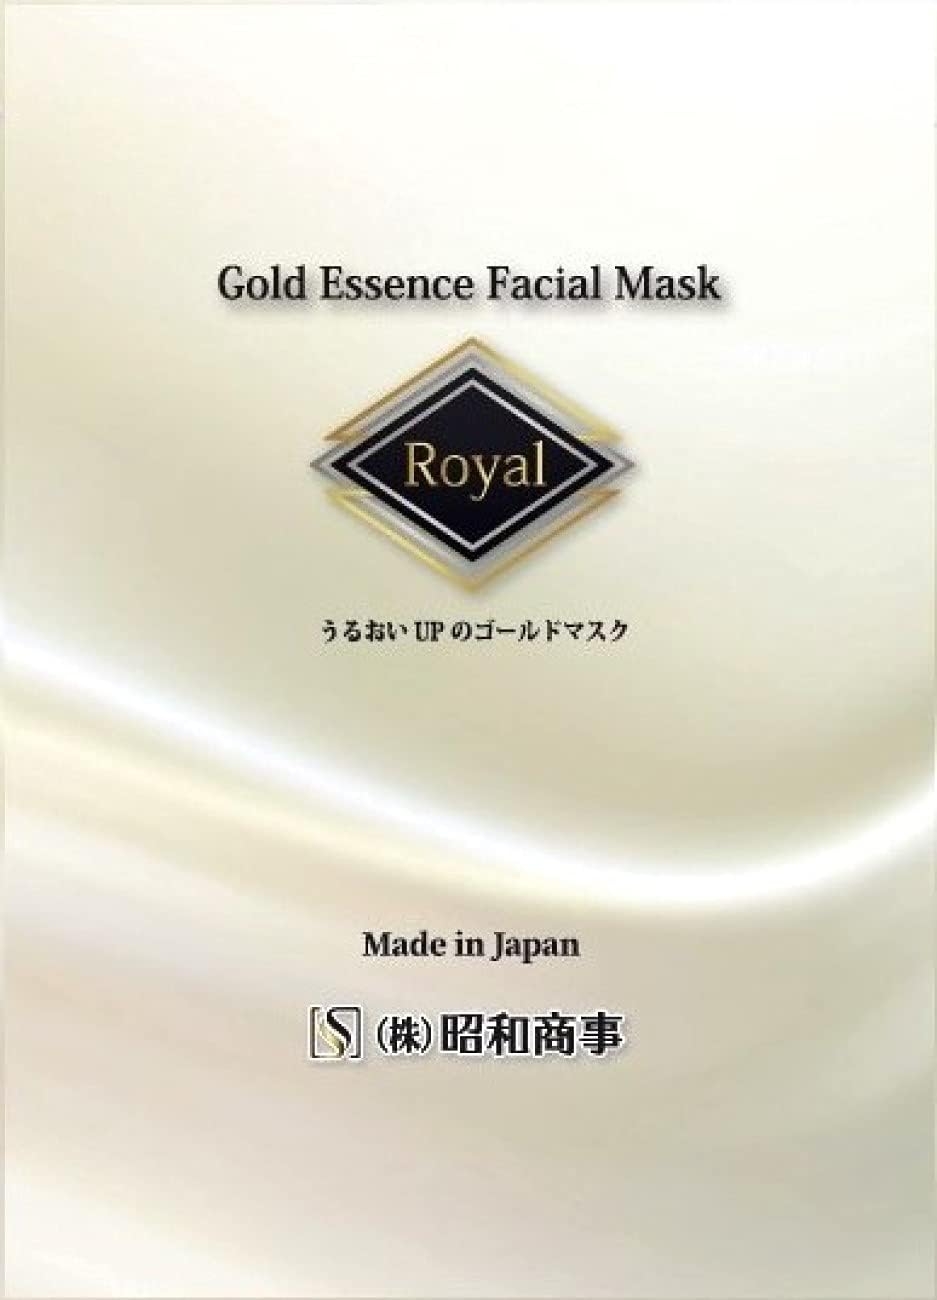 Royal Facial Mask(ローヤルフェイシャルマスク) ローヤル 金コロイド  シートマスクの商品画像1 